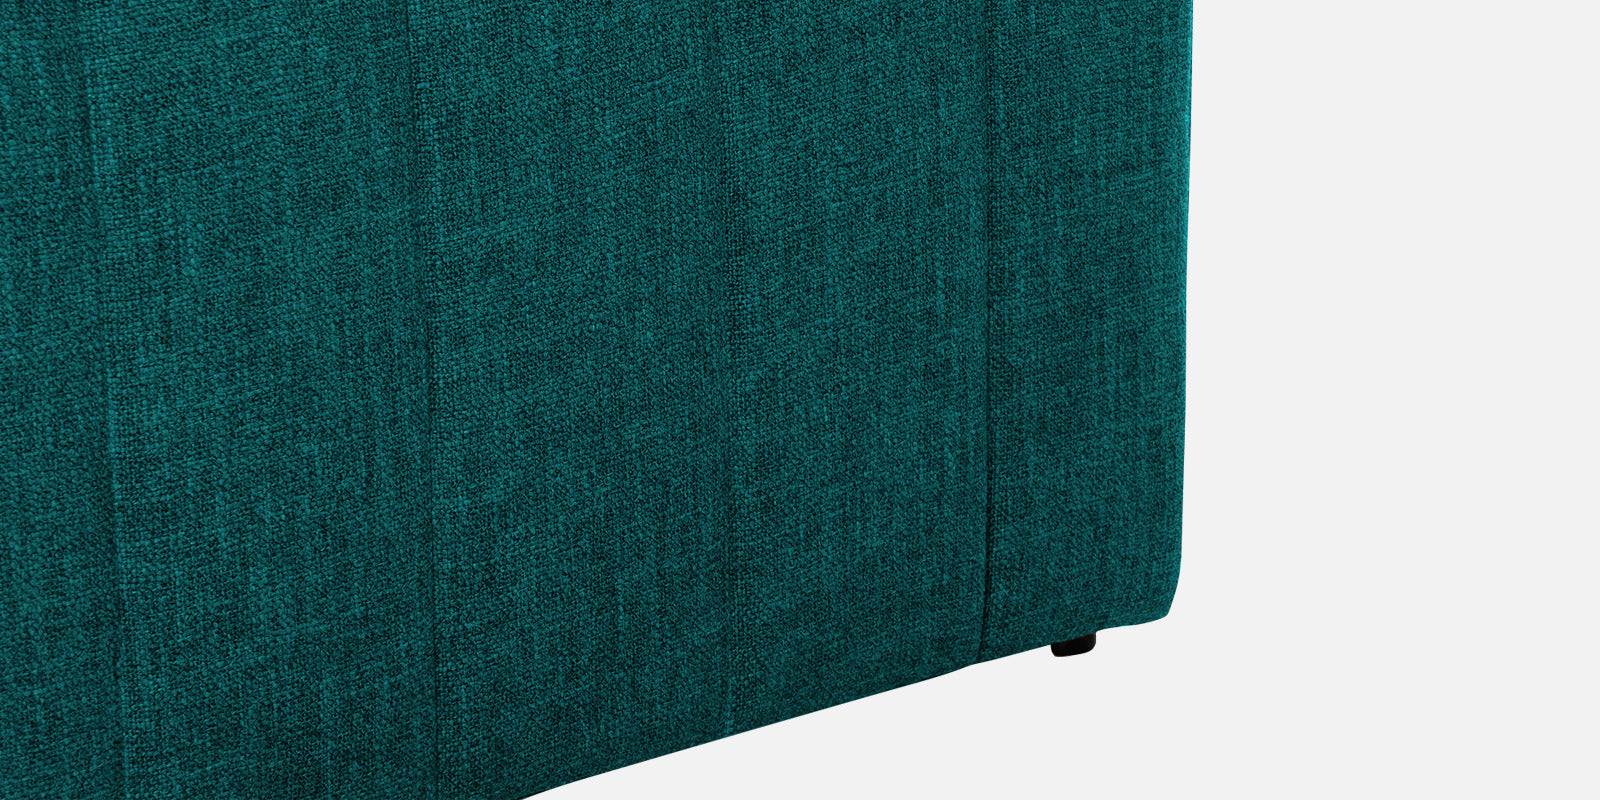 Lara Fabric 3 Seater Sofa in Sea Green Colour